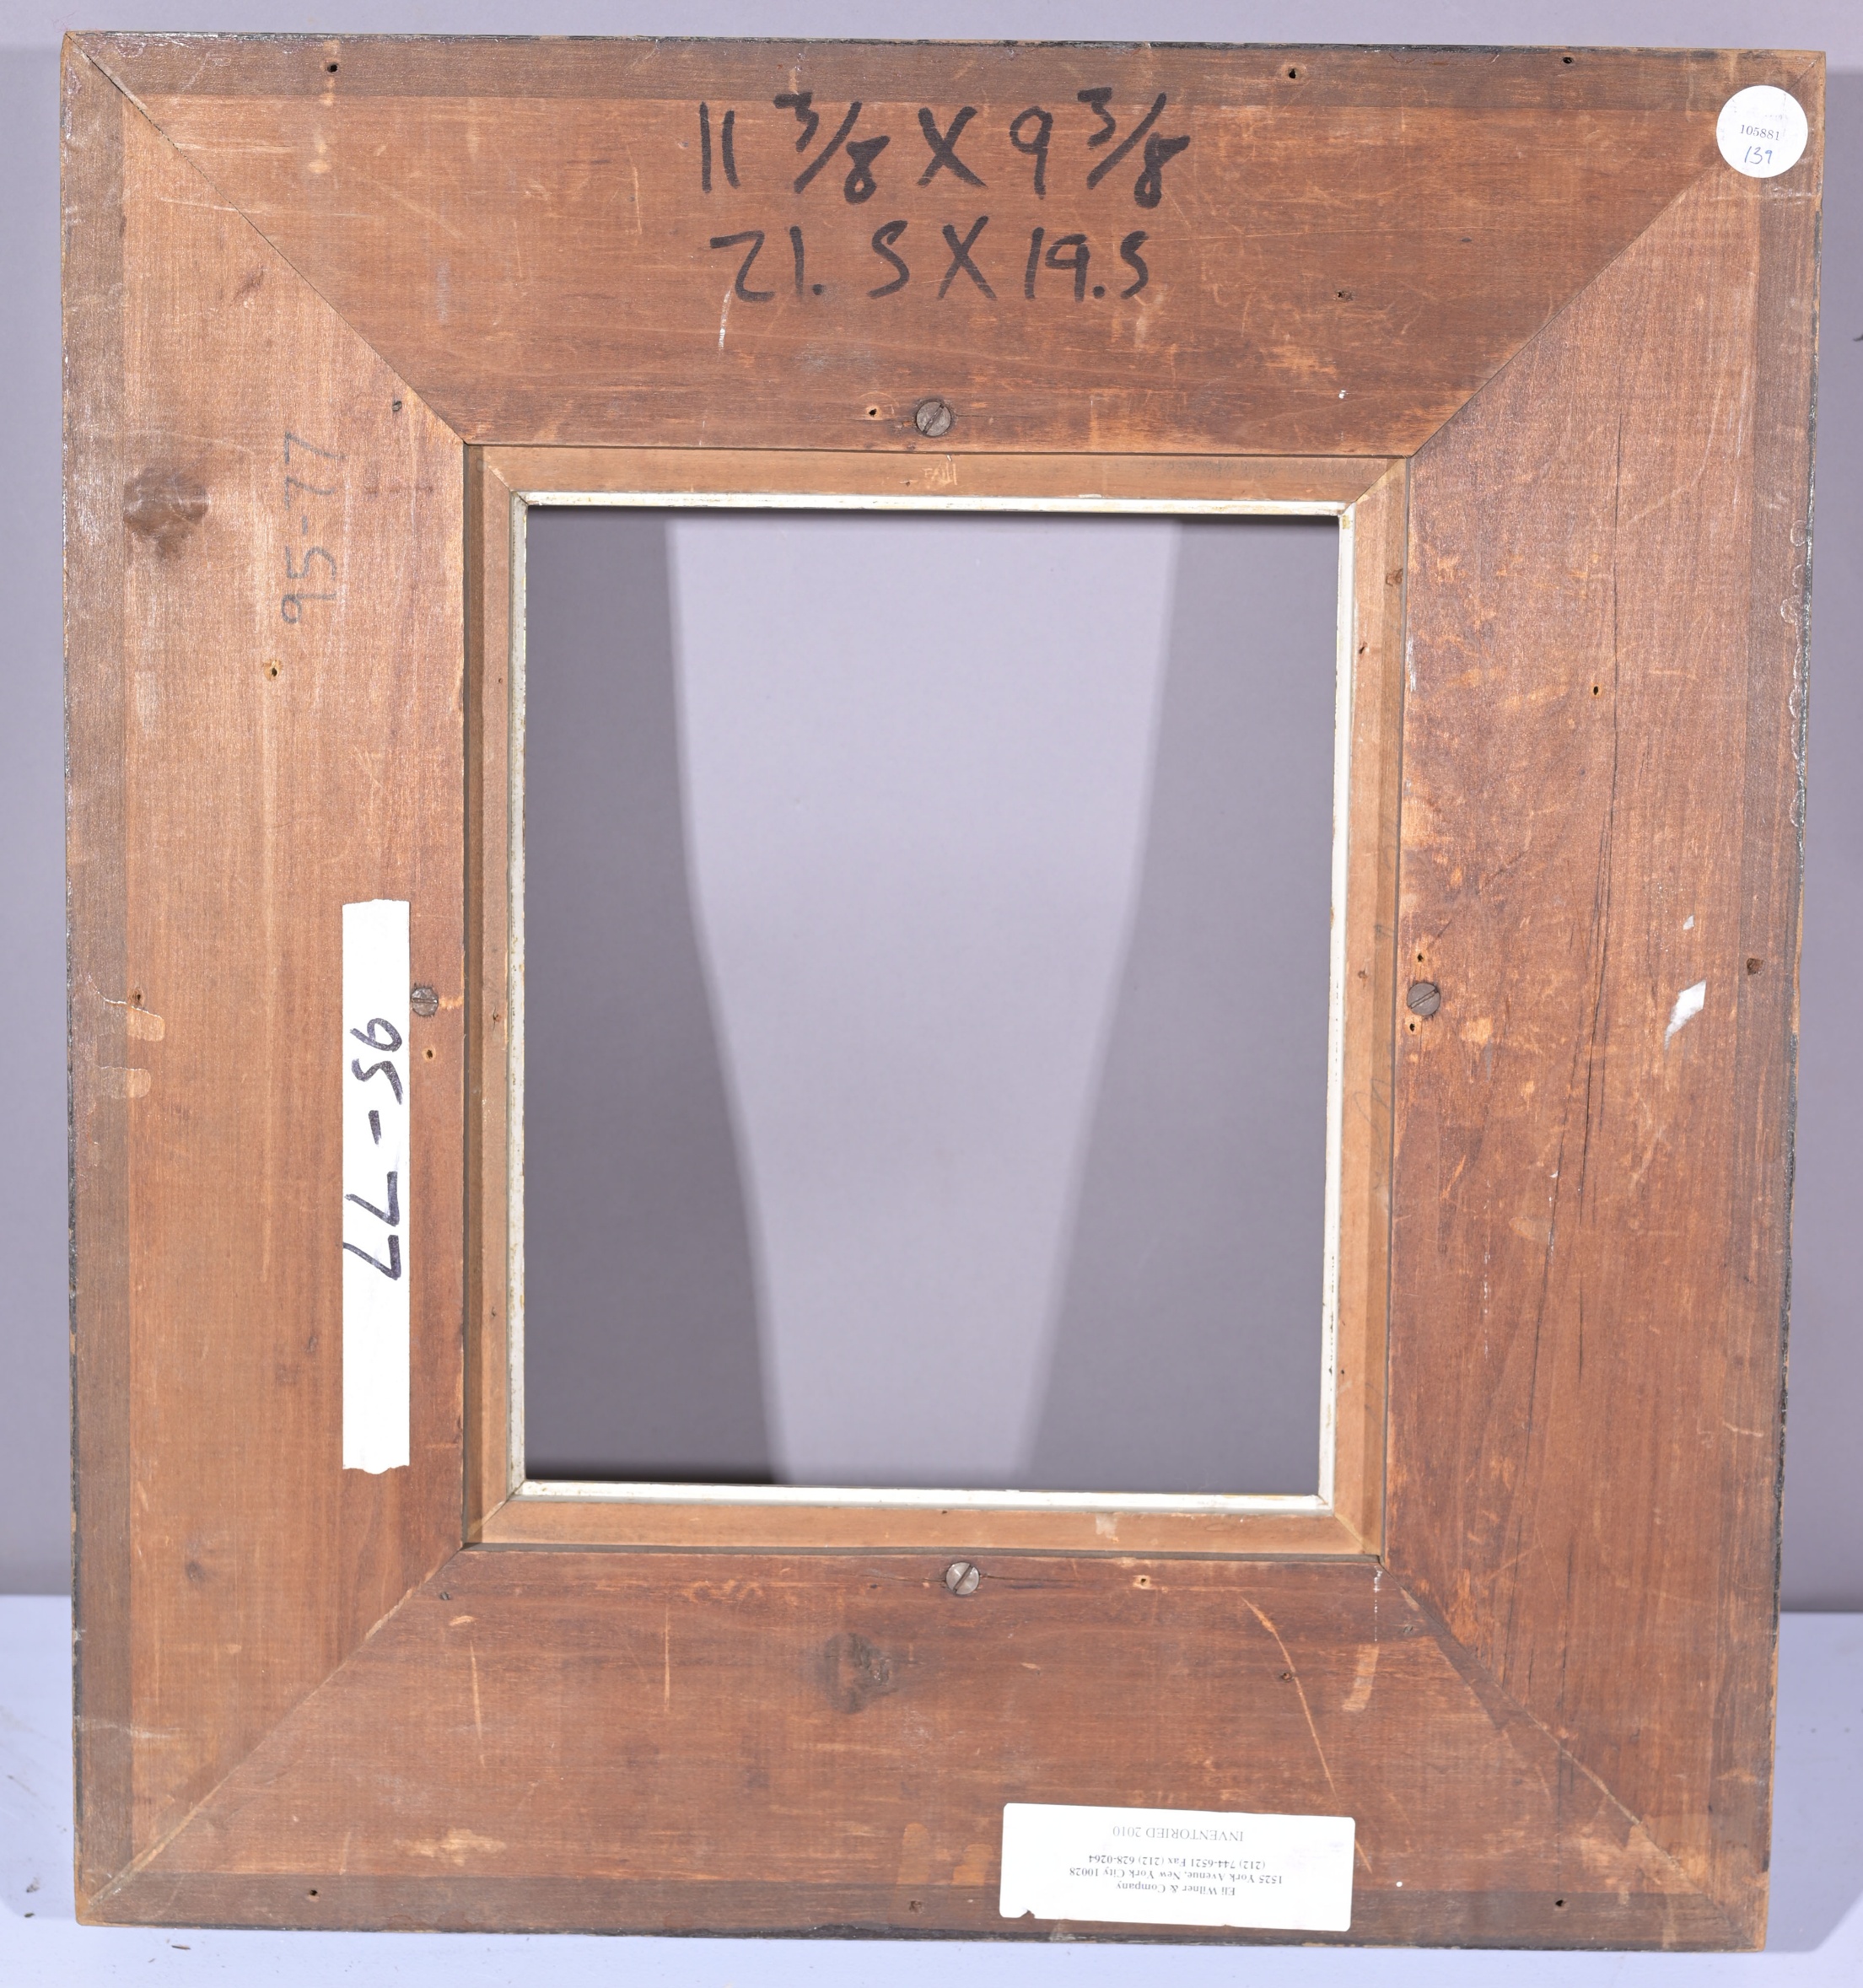 American 1890's Gilt Wood Frame - 11 3/8 x 9 3/8 - Image 7 of 7